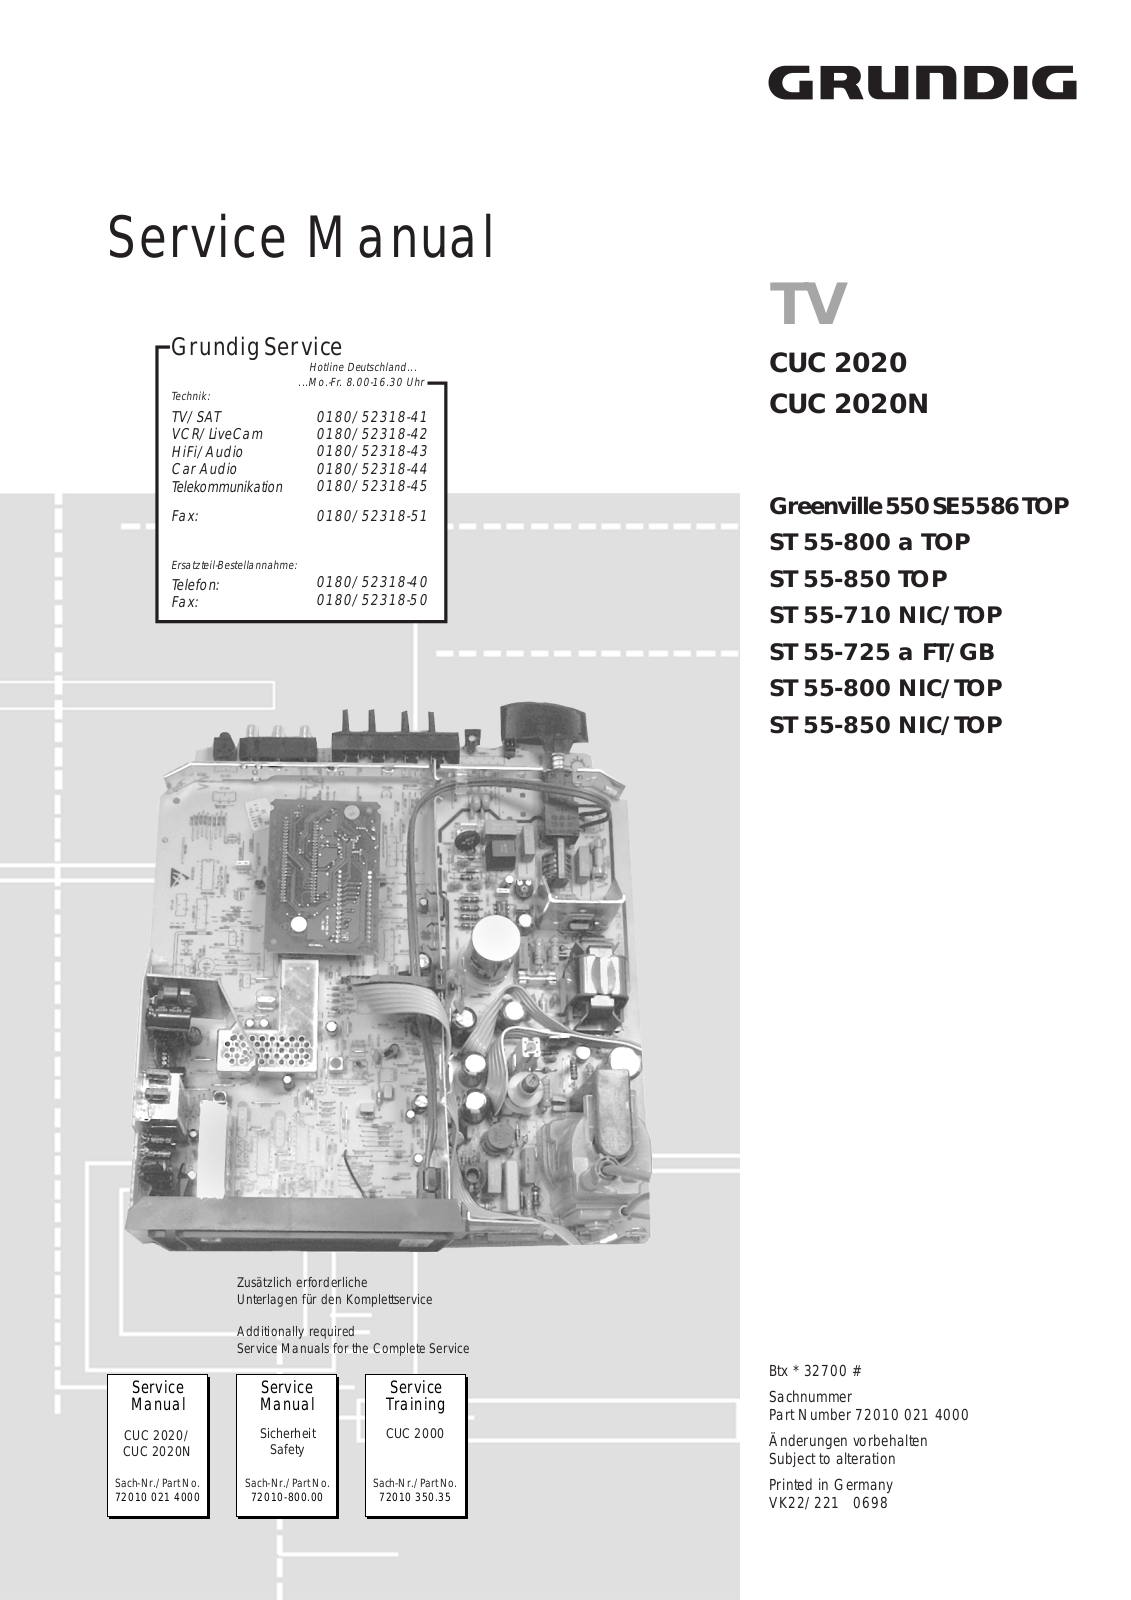 GRUNDIG CUC 2020, CUC2020N Service Manual